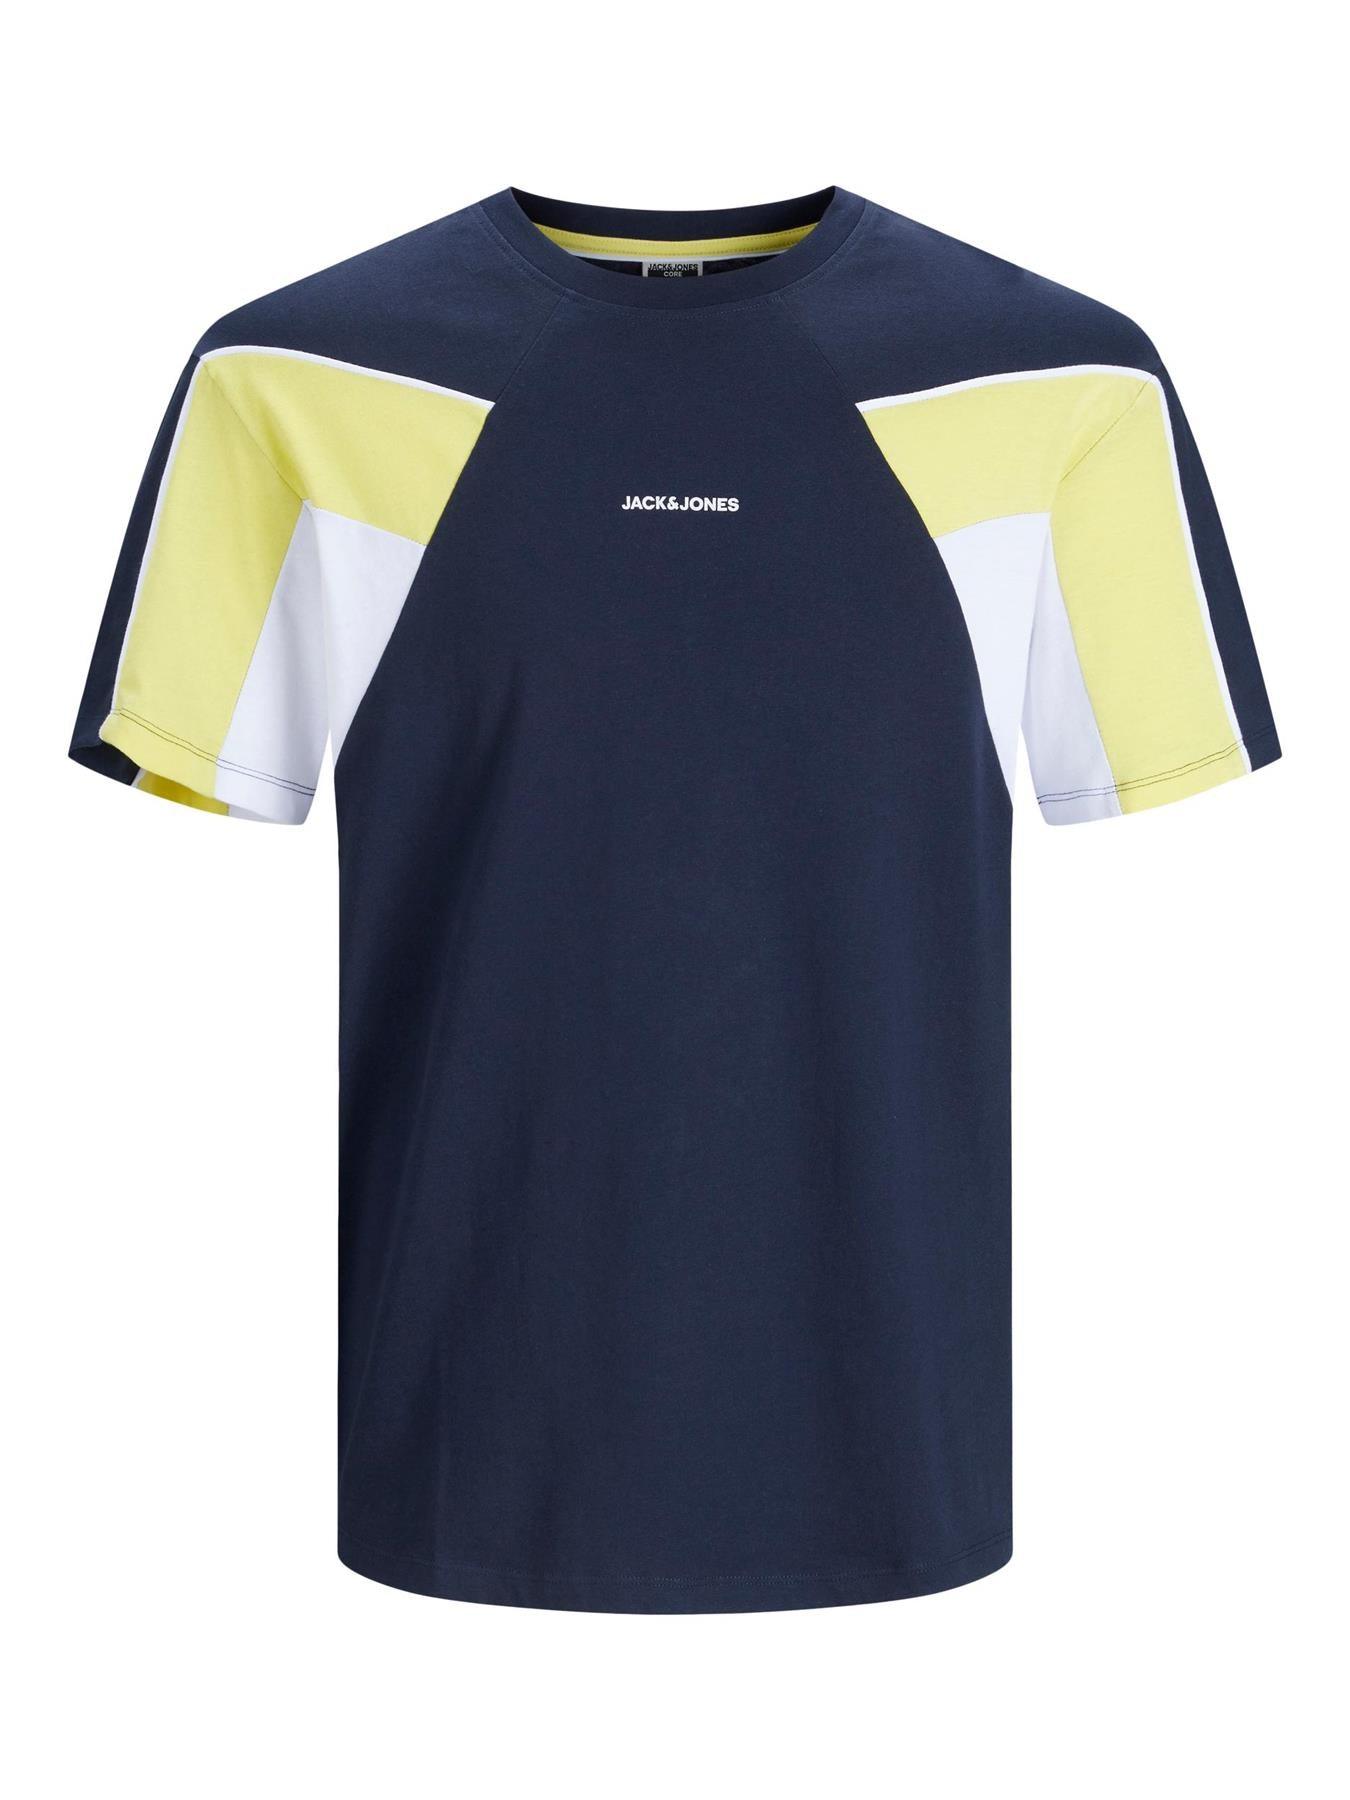 Jack & Jones Mens 'Jakob' T-Shirt in Navy - VR2 Clothing